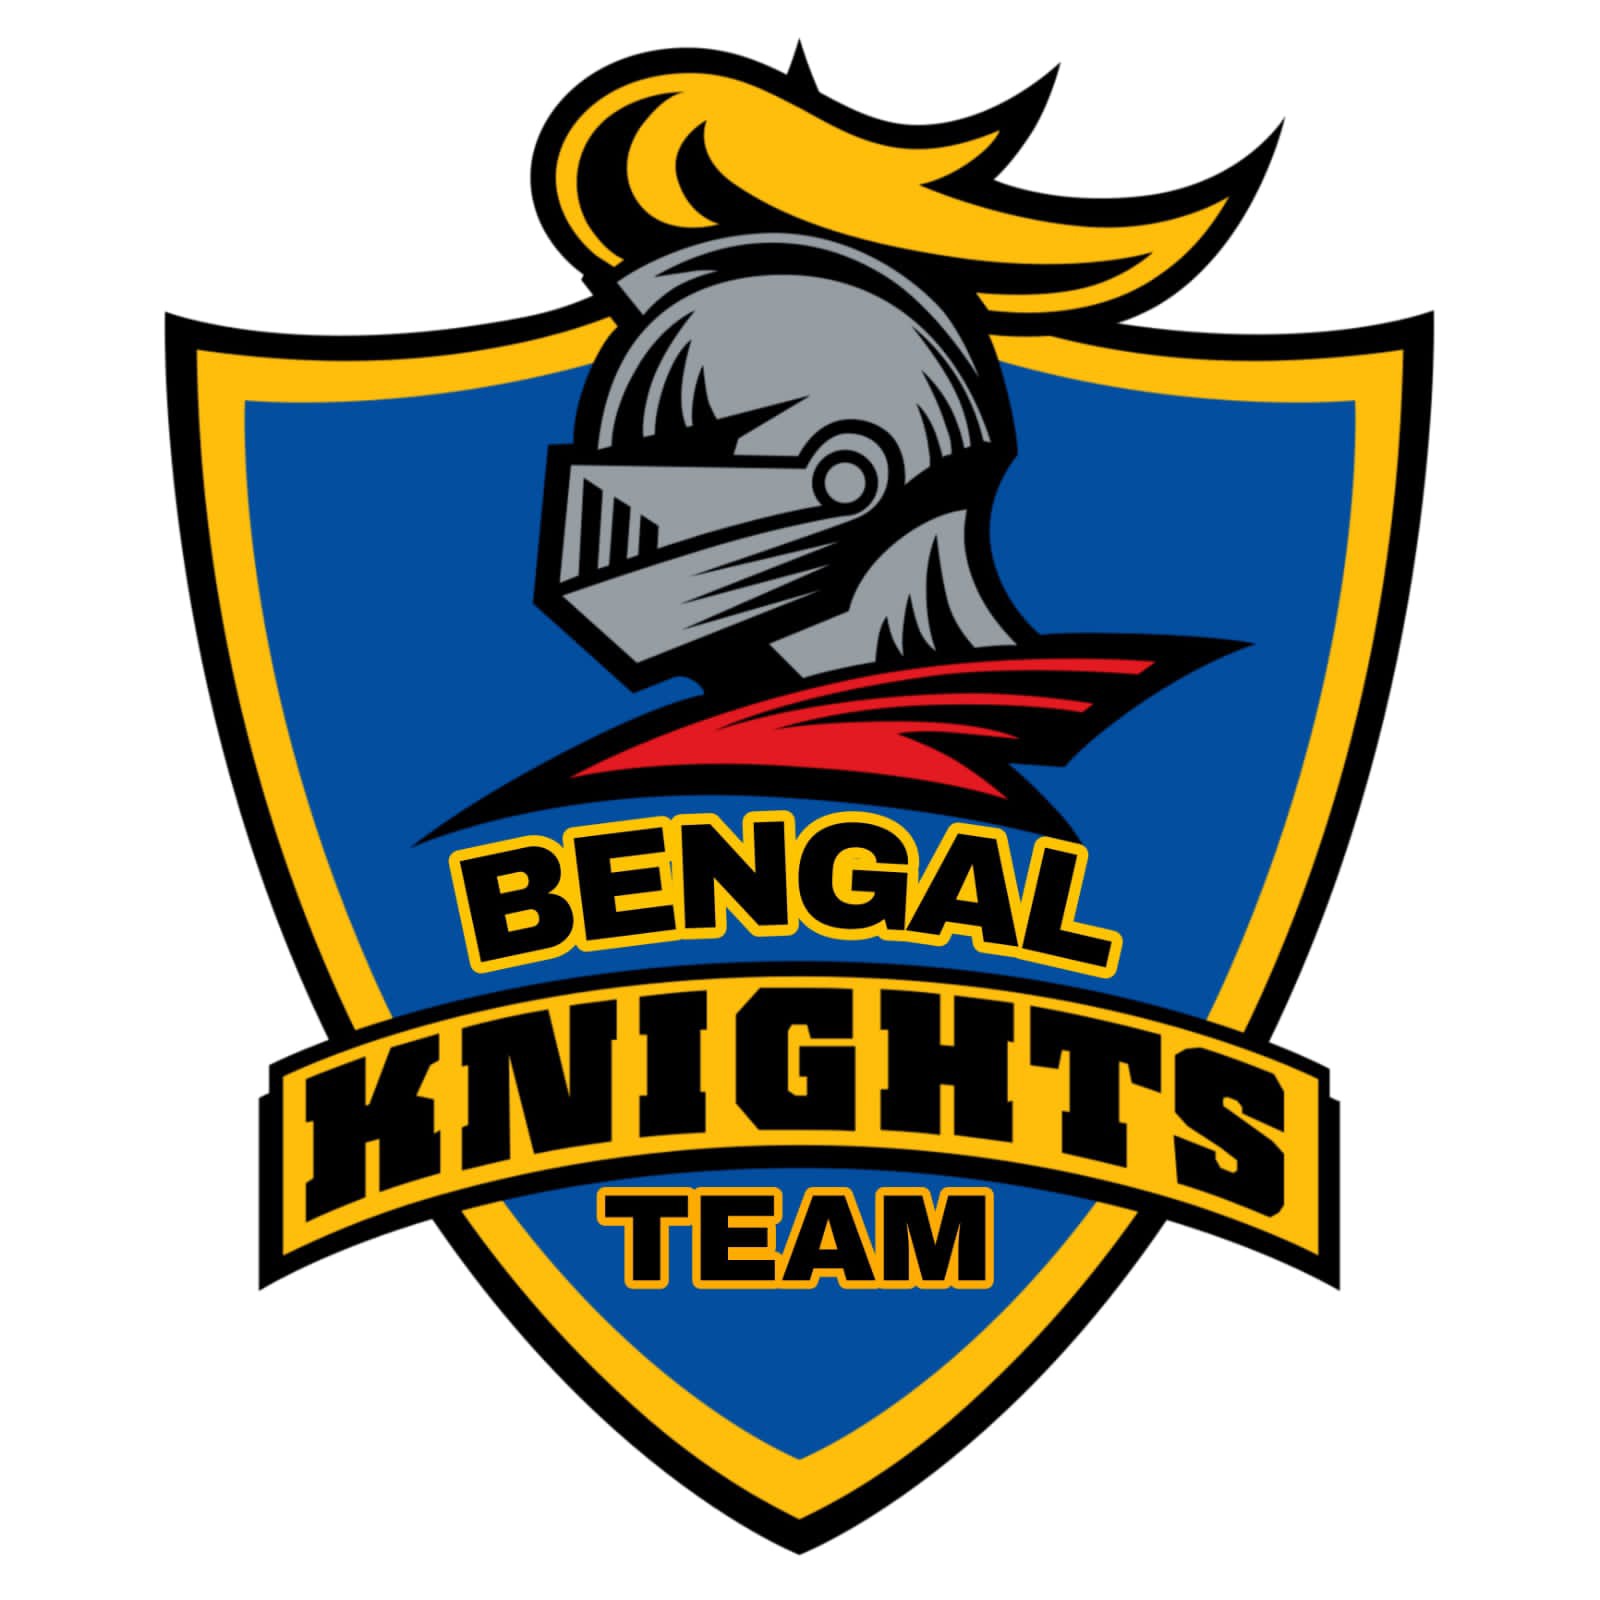 Bengal Knights